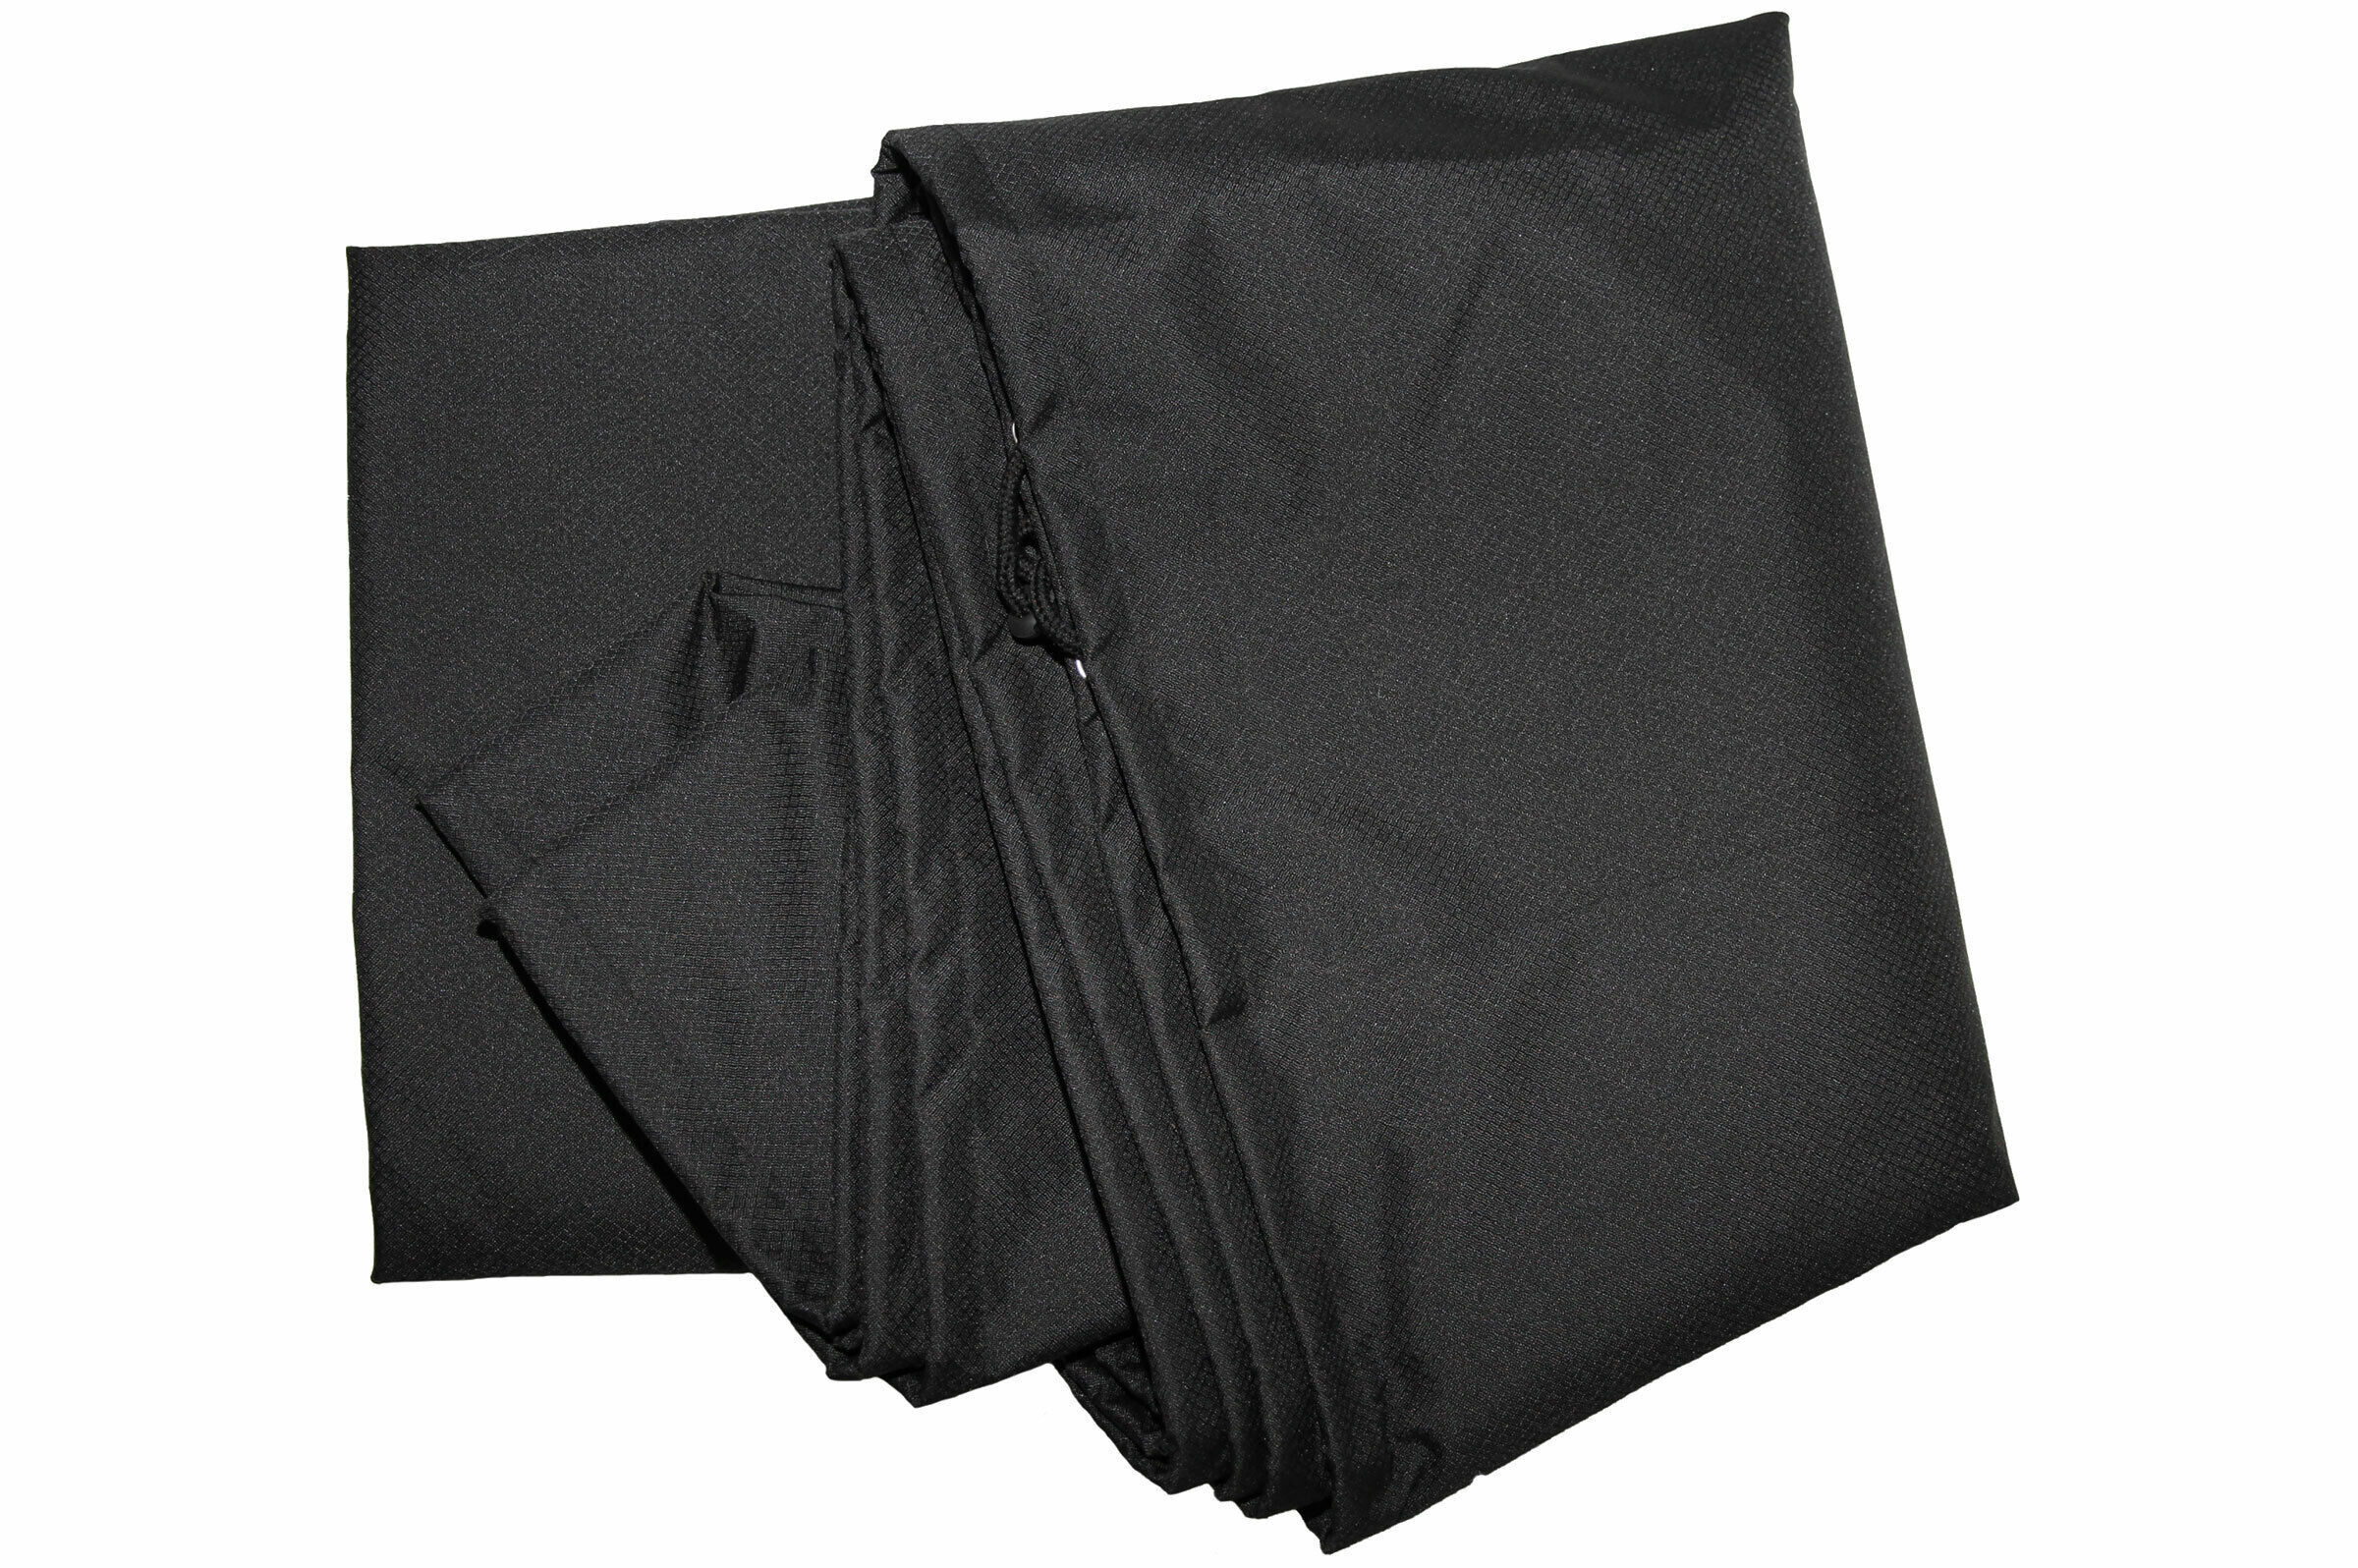 OUTTECH Schutzhülle für Lounge Bänke, schwarz, Ripstop-Polyester, 250 x 100 x 70 cm, atmungsaktiv 10JX04620